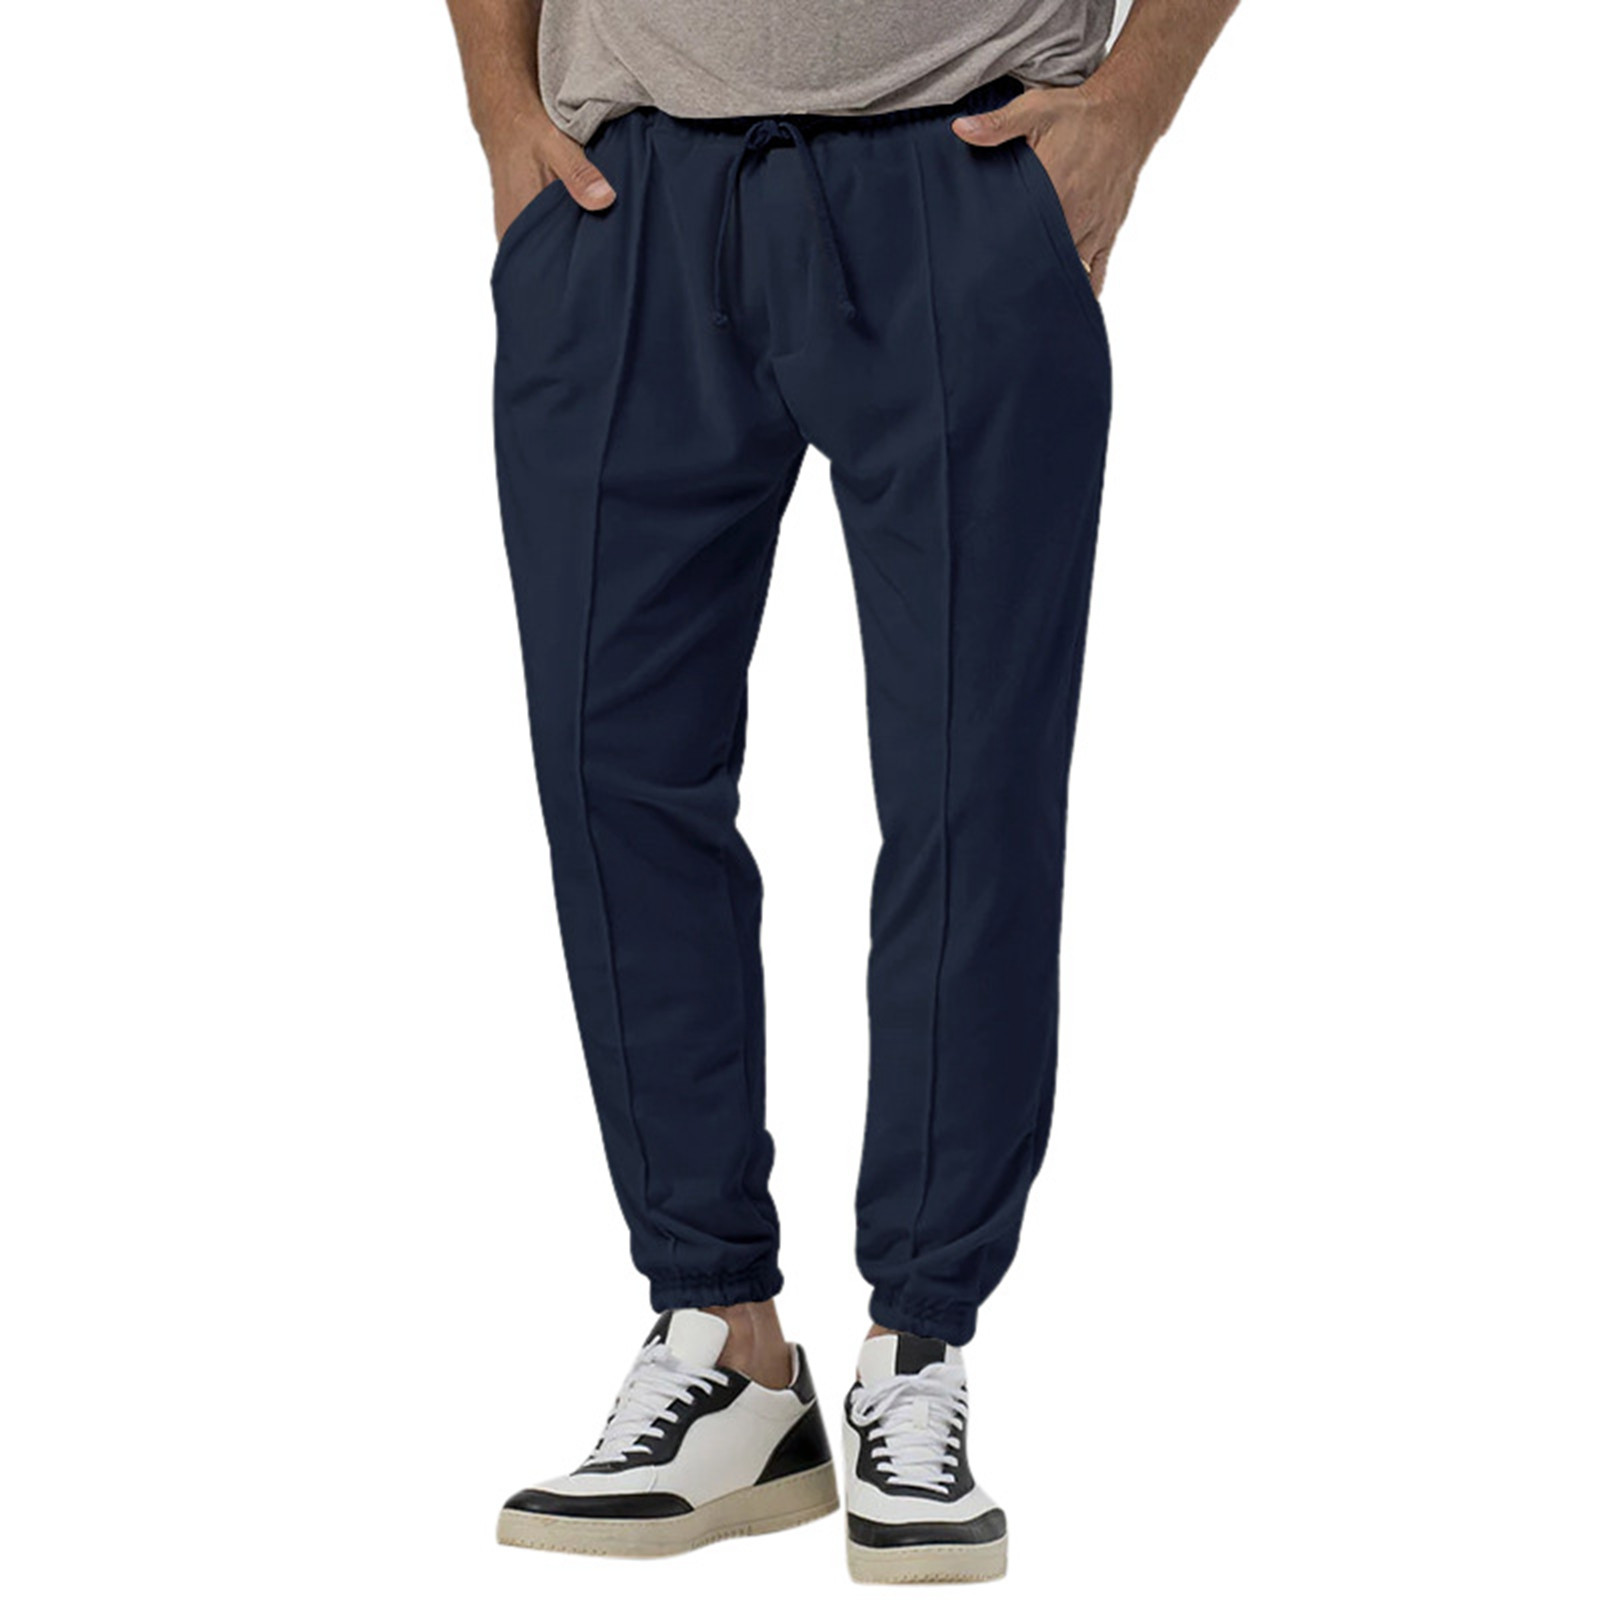 adviicd Sweat Pants for Mens Mens Fashion Slim Fit Dress Pants Casual ...